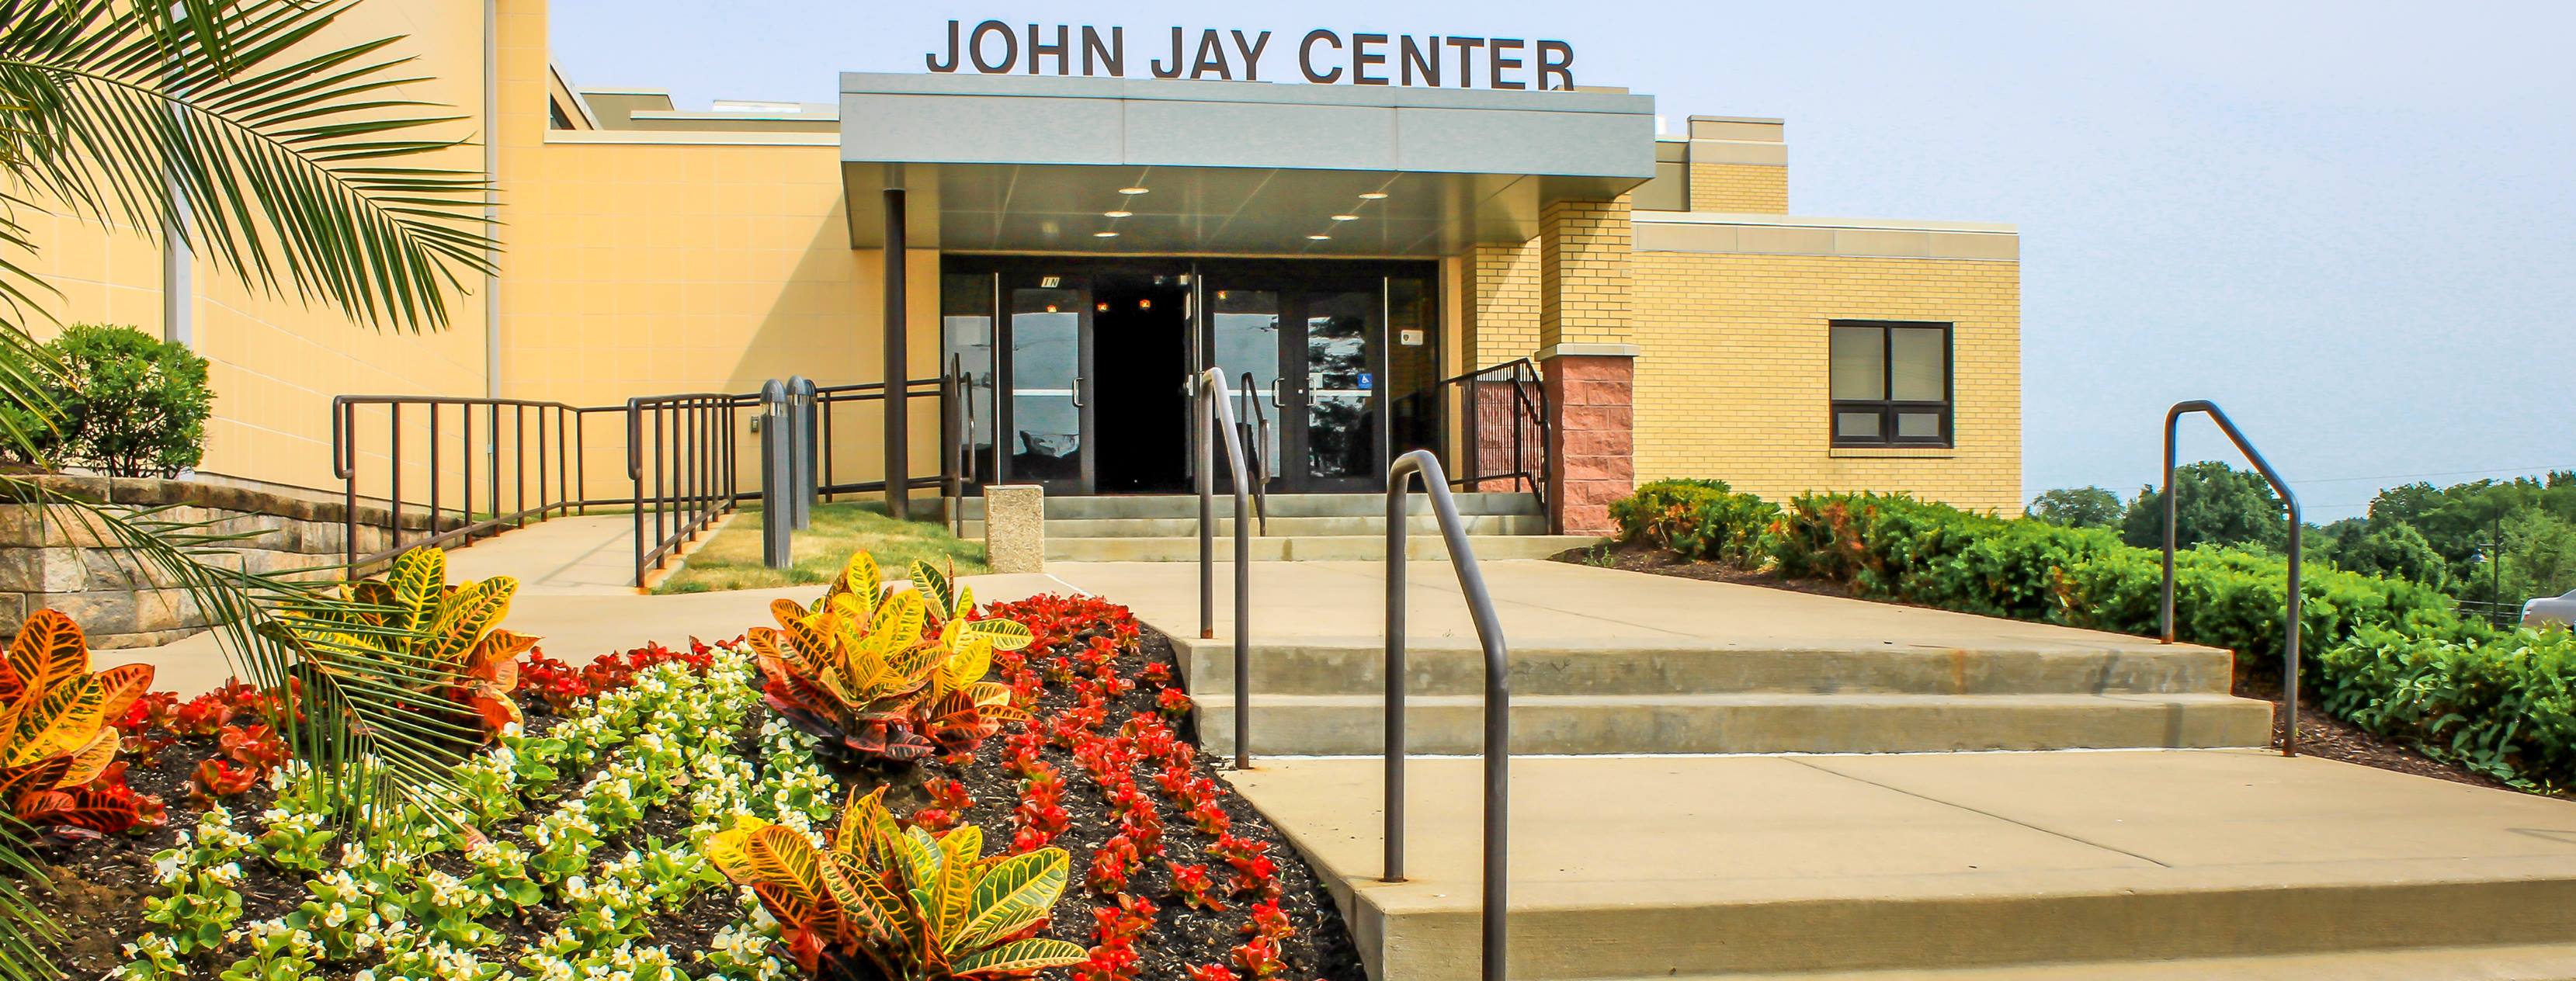 John Jay Center